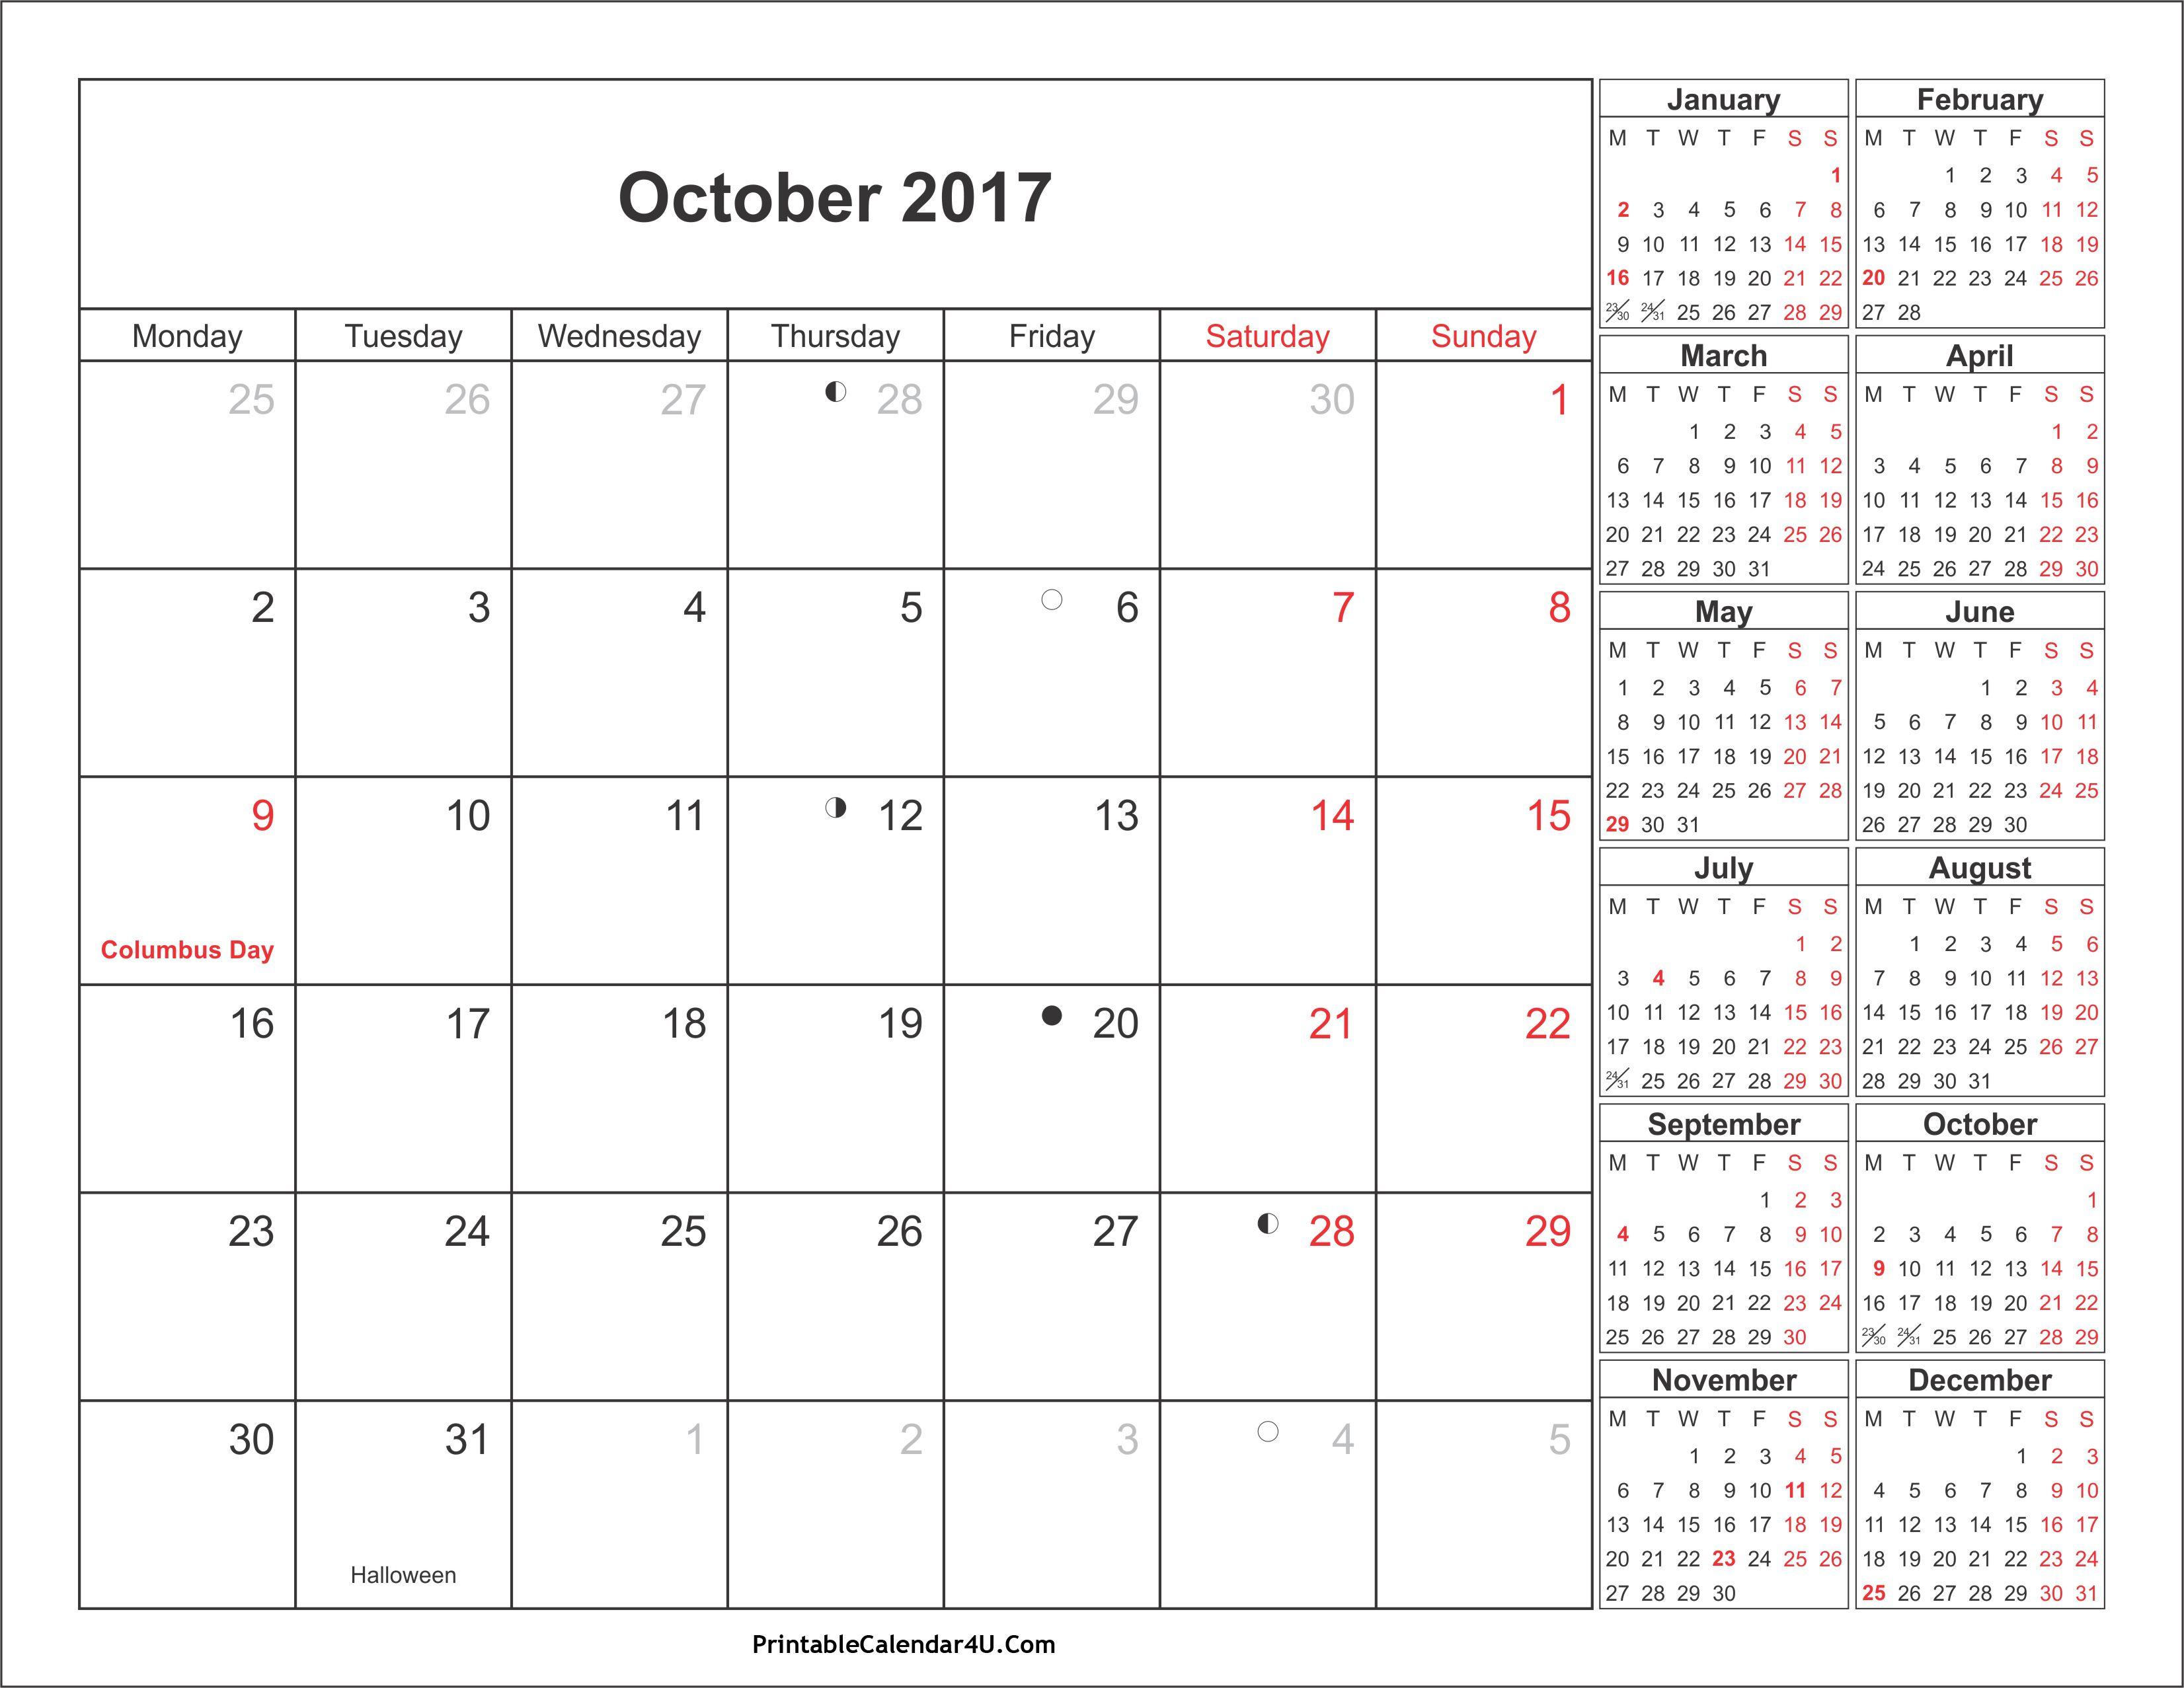 October 2017 Calendar Printable With Holidays. monthly calendar